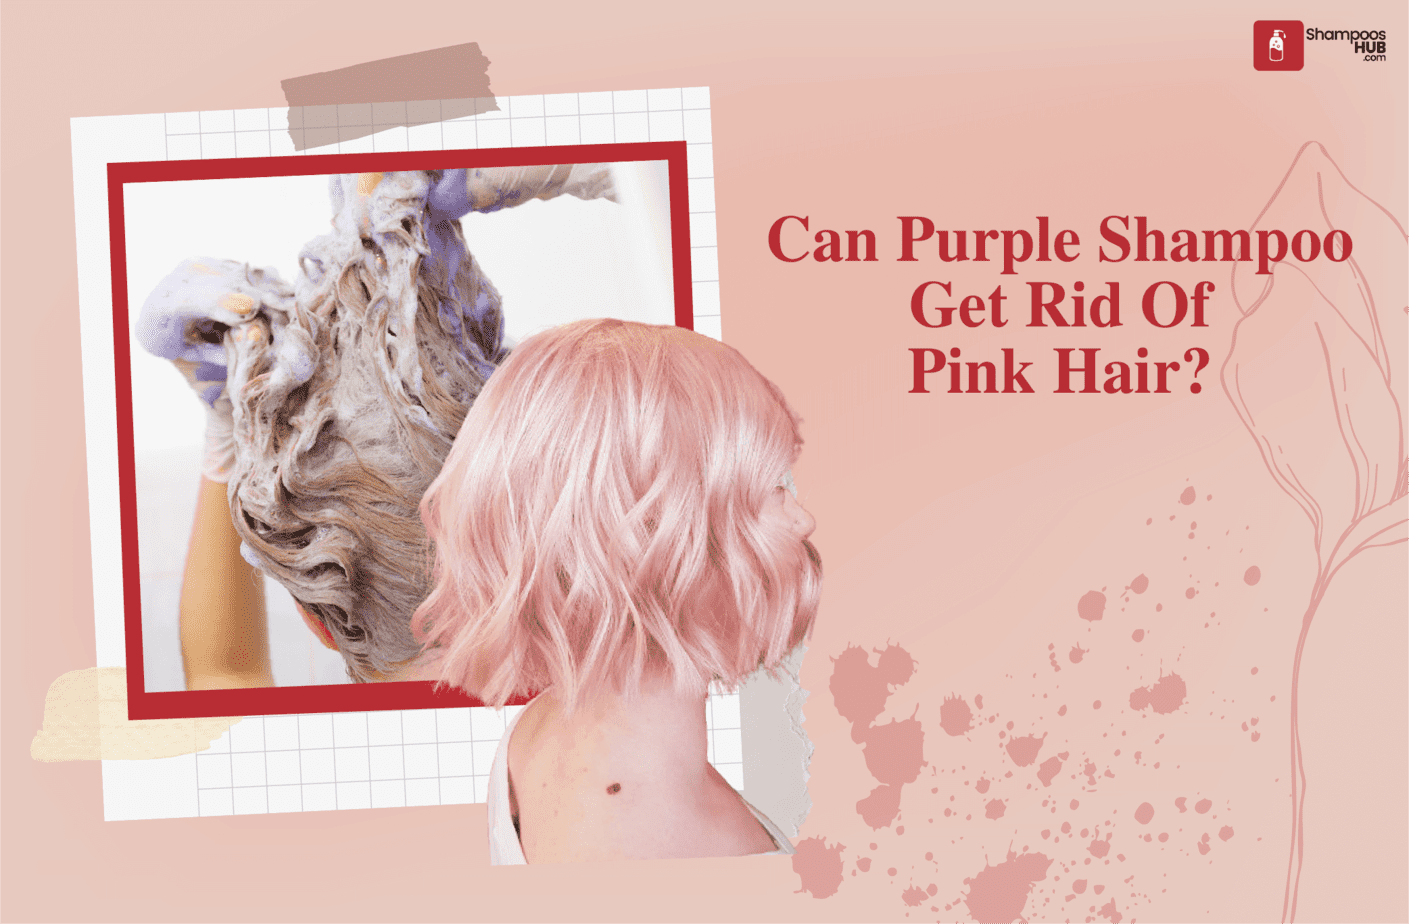 Can Purple Shampoo Get Rid Of Pink Hair?